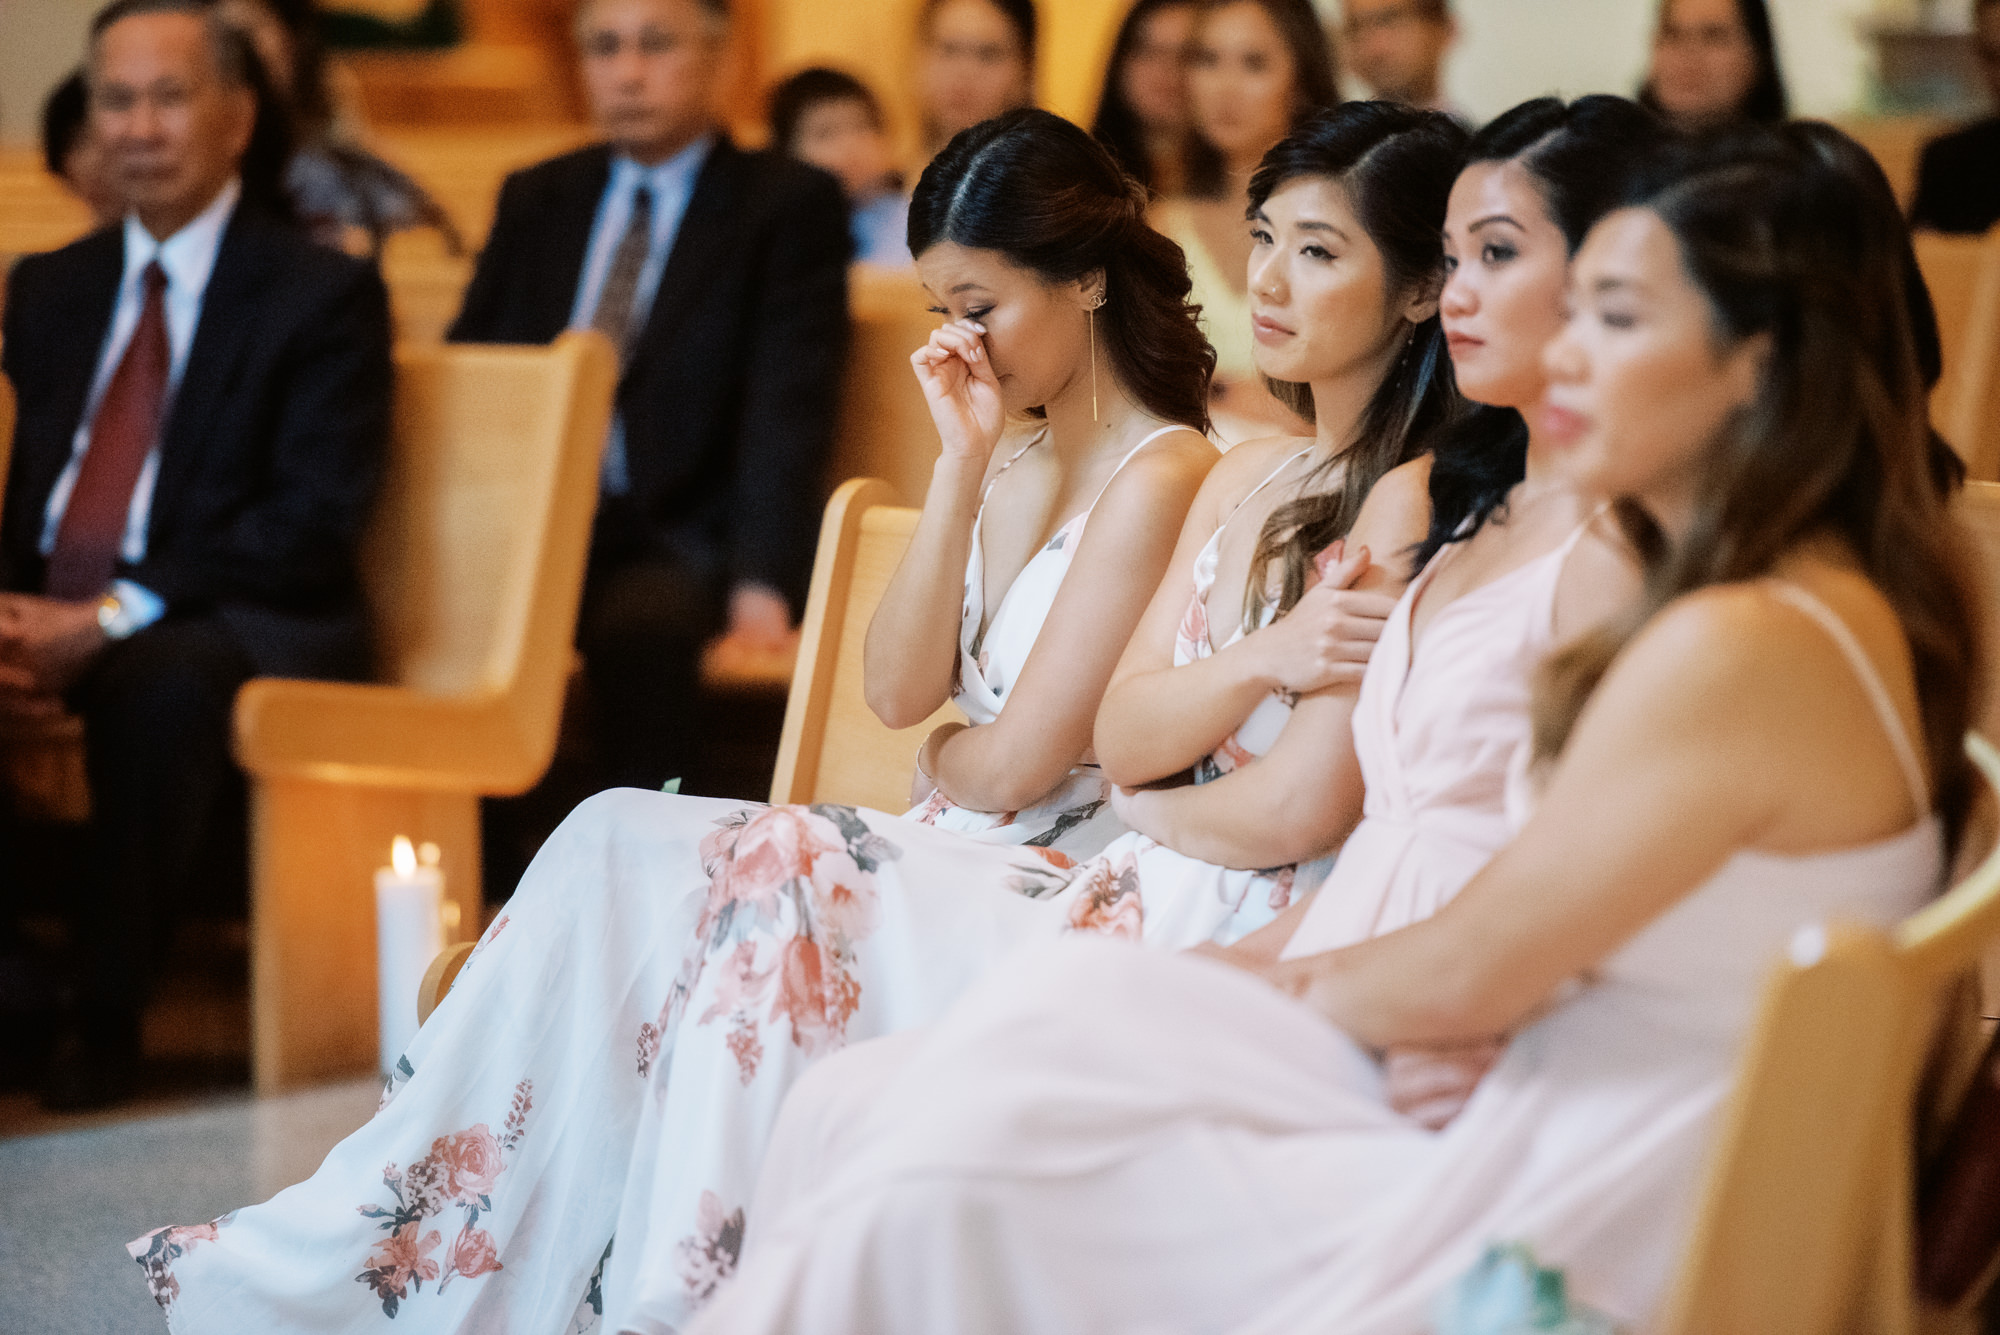 St Anne's Catholic Church wedding: Bridesmaid gets emotional